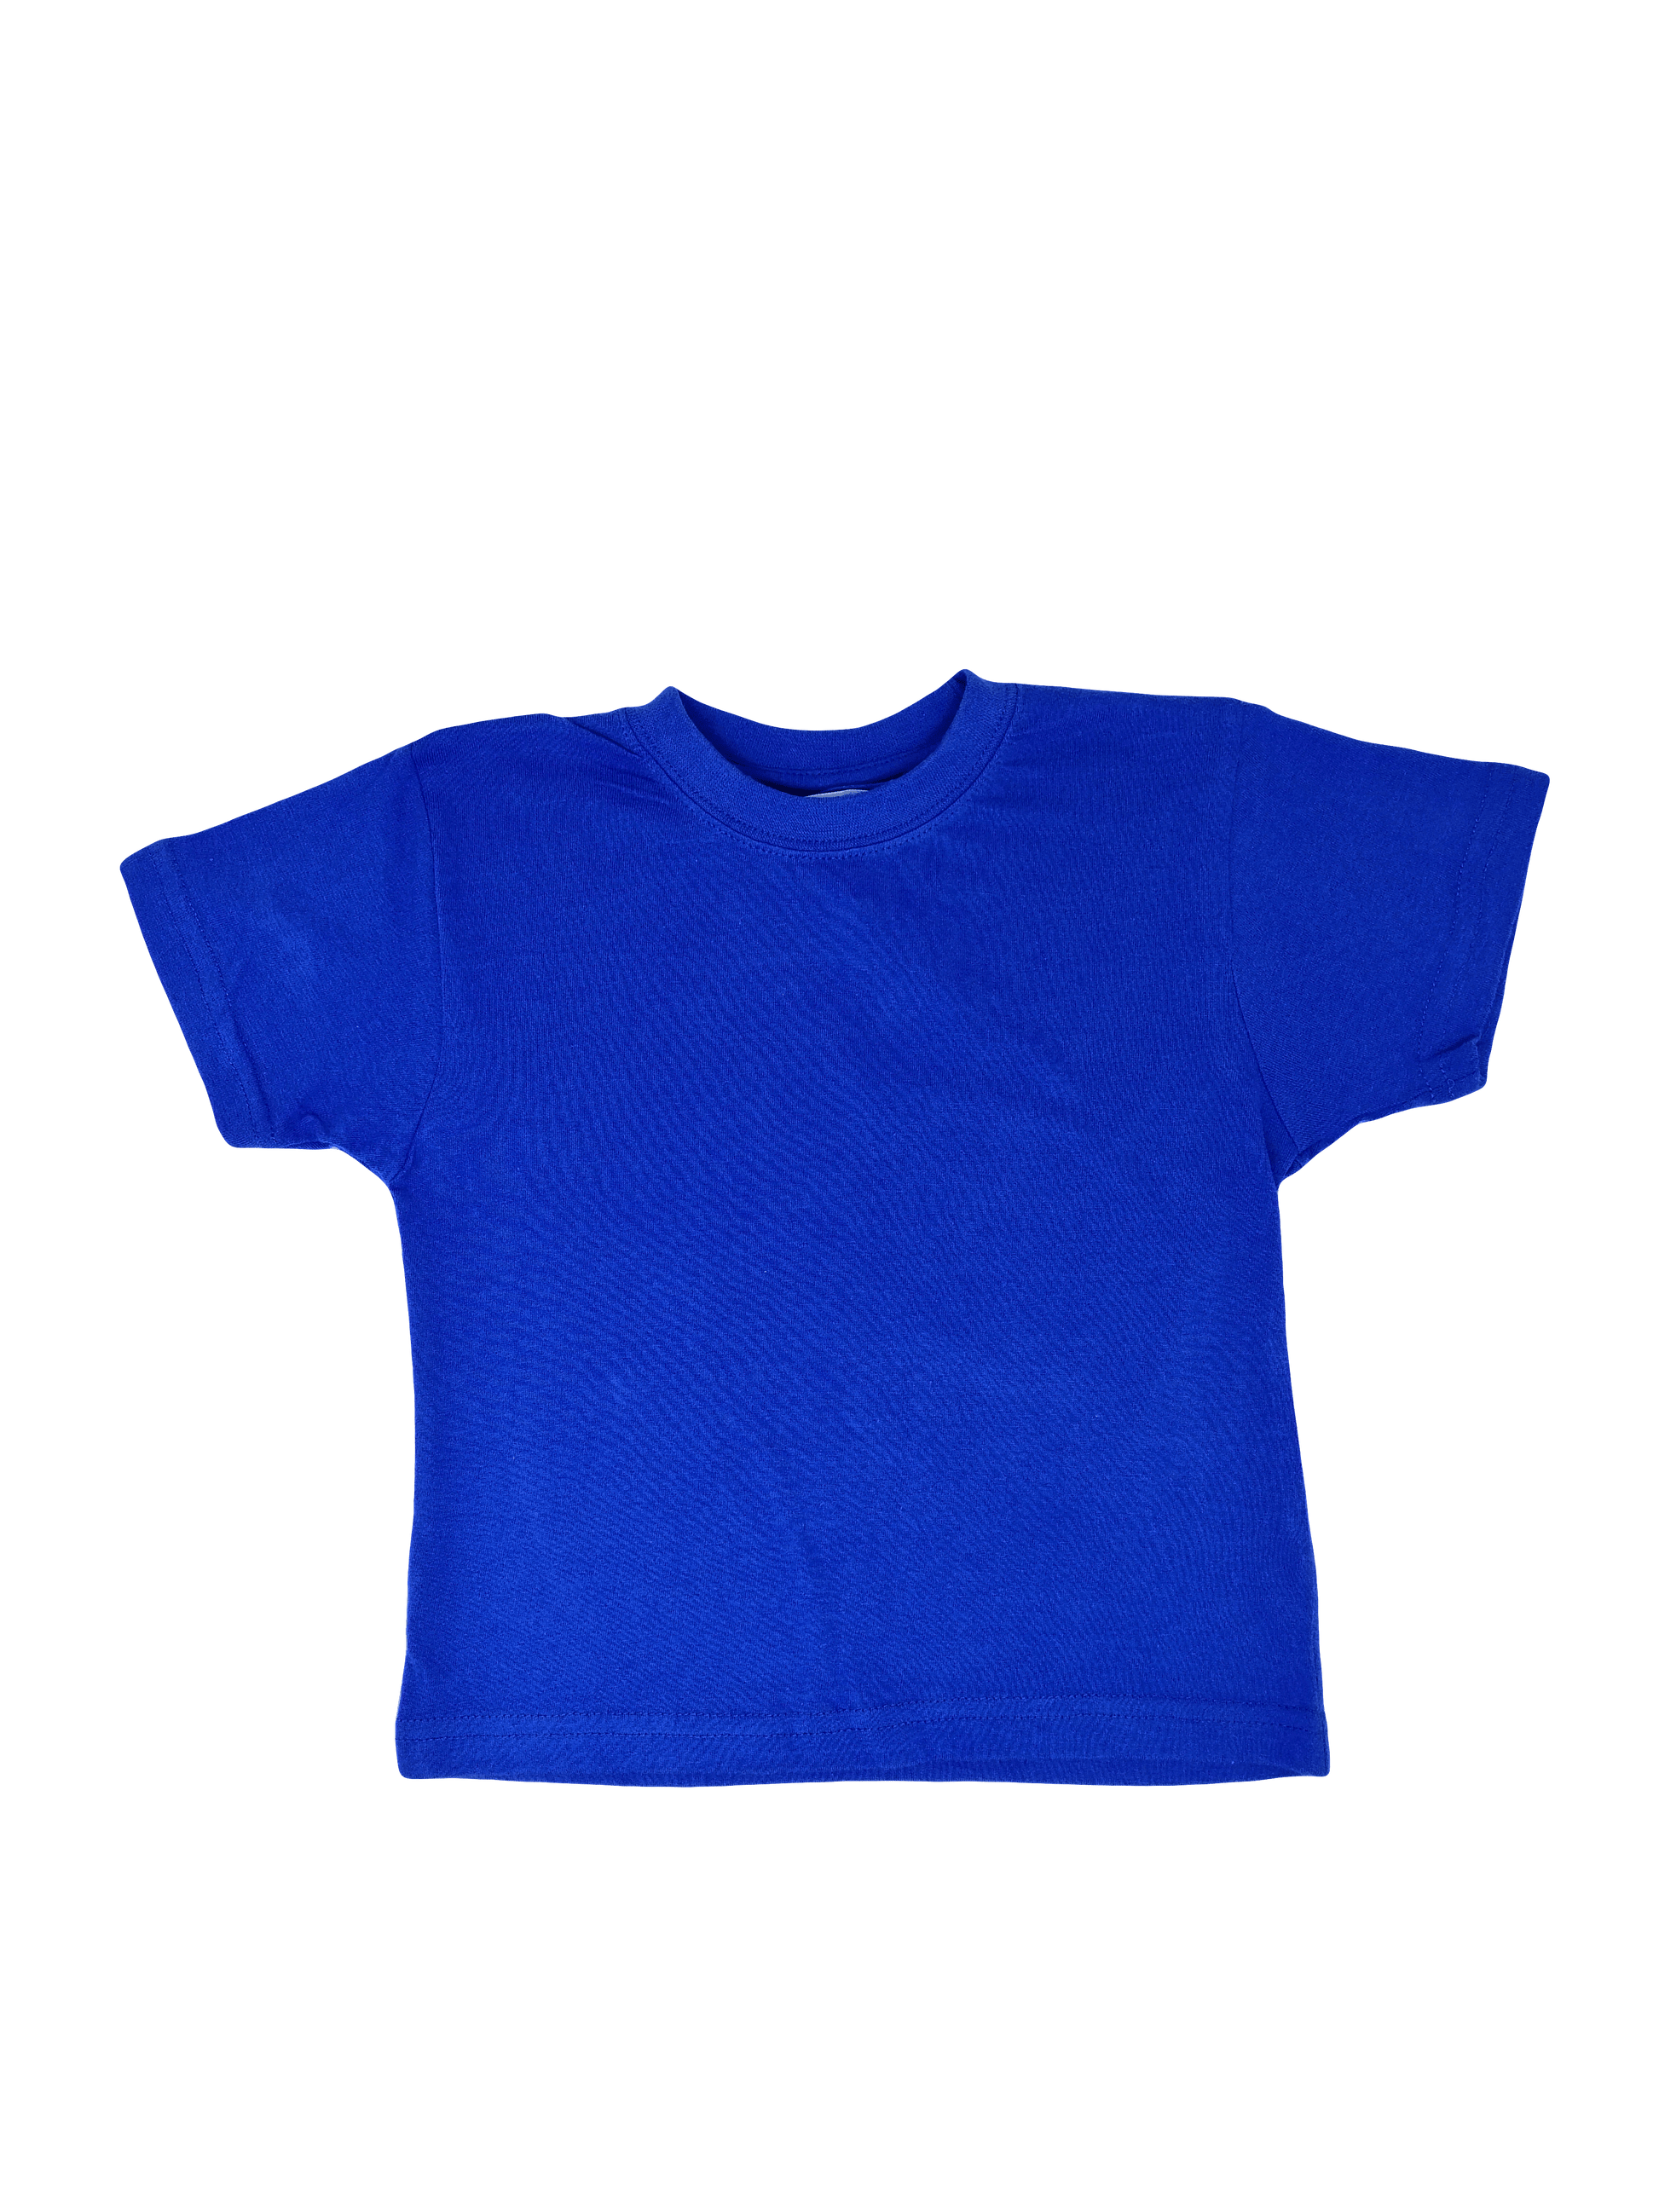 PILMA Boys Tops 11-12 Years / Indigo PILMA - Kids T-Shirt